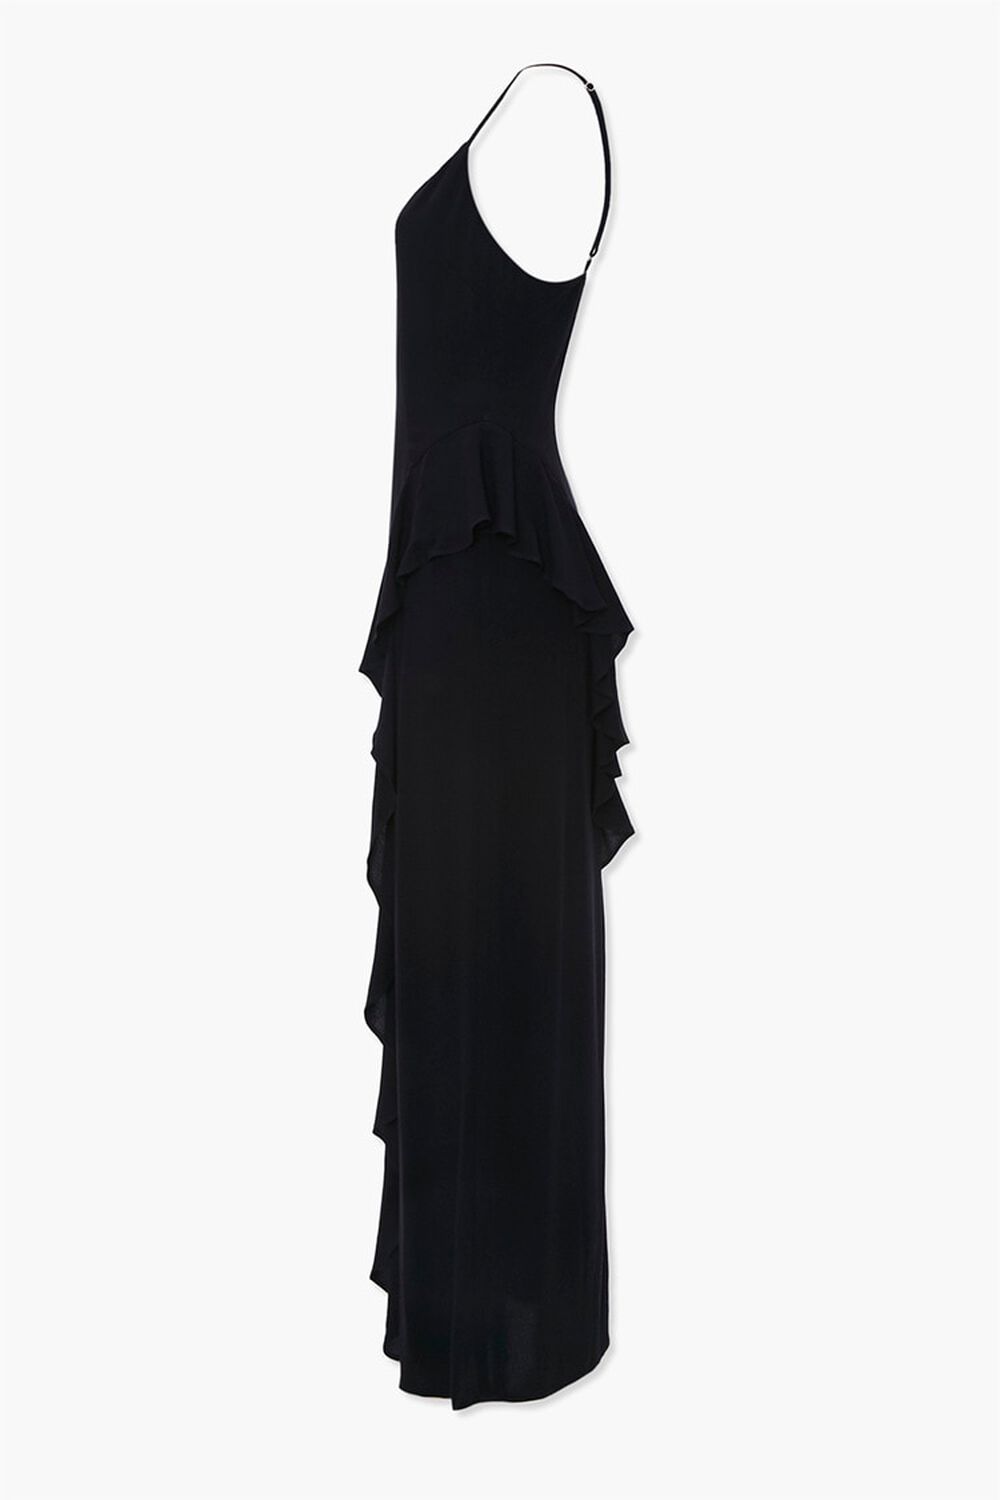 BLACK Ruffle-Trim Maxi Dress, image 2